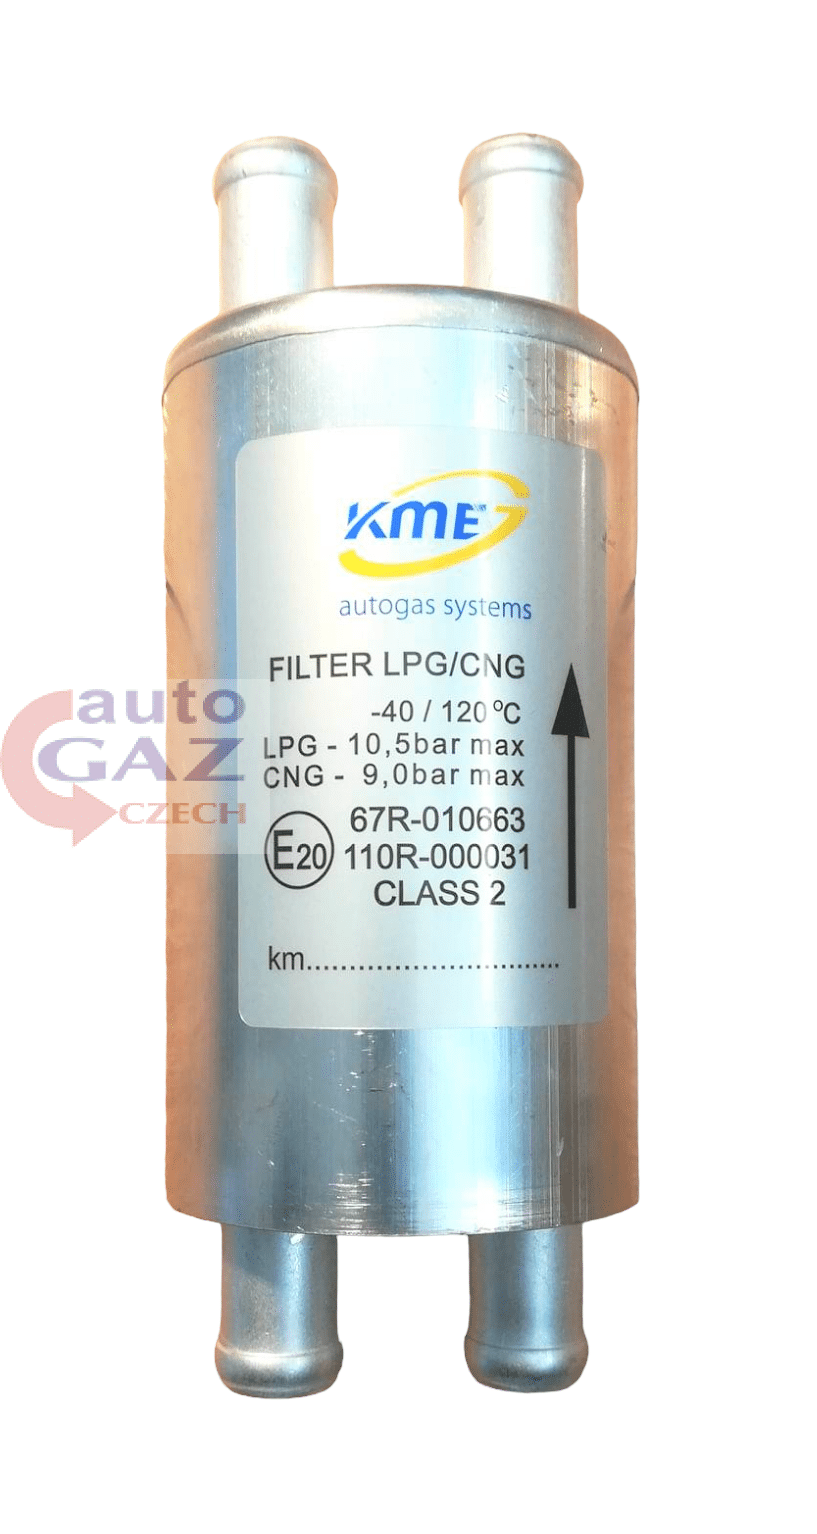 Filtr fazy lotnej KME 2x12mm / 2x12 mm włókno szklane